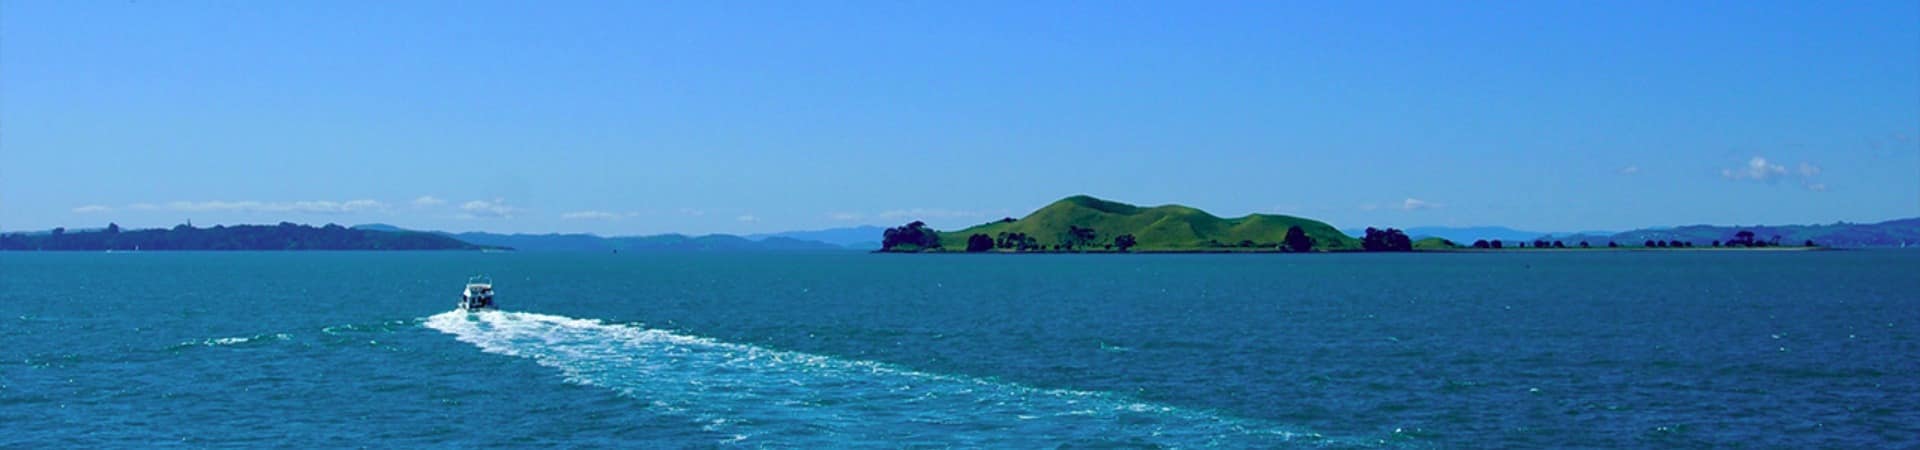 Novazelandia auckland waiheke ilha mar